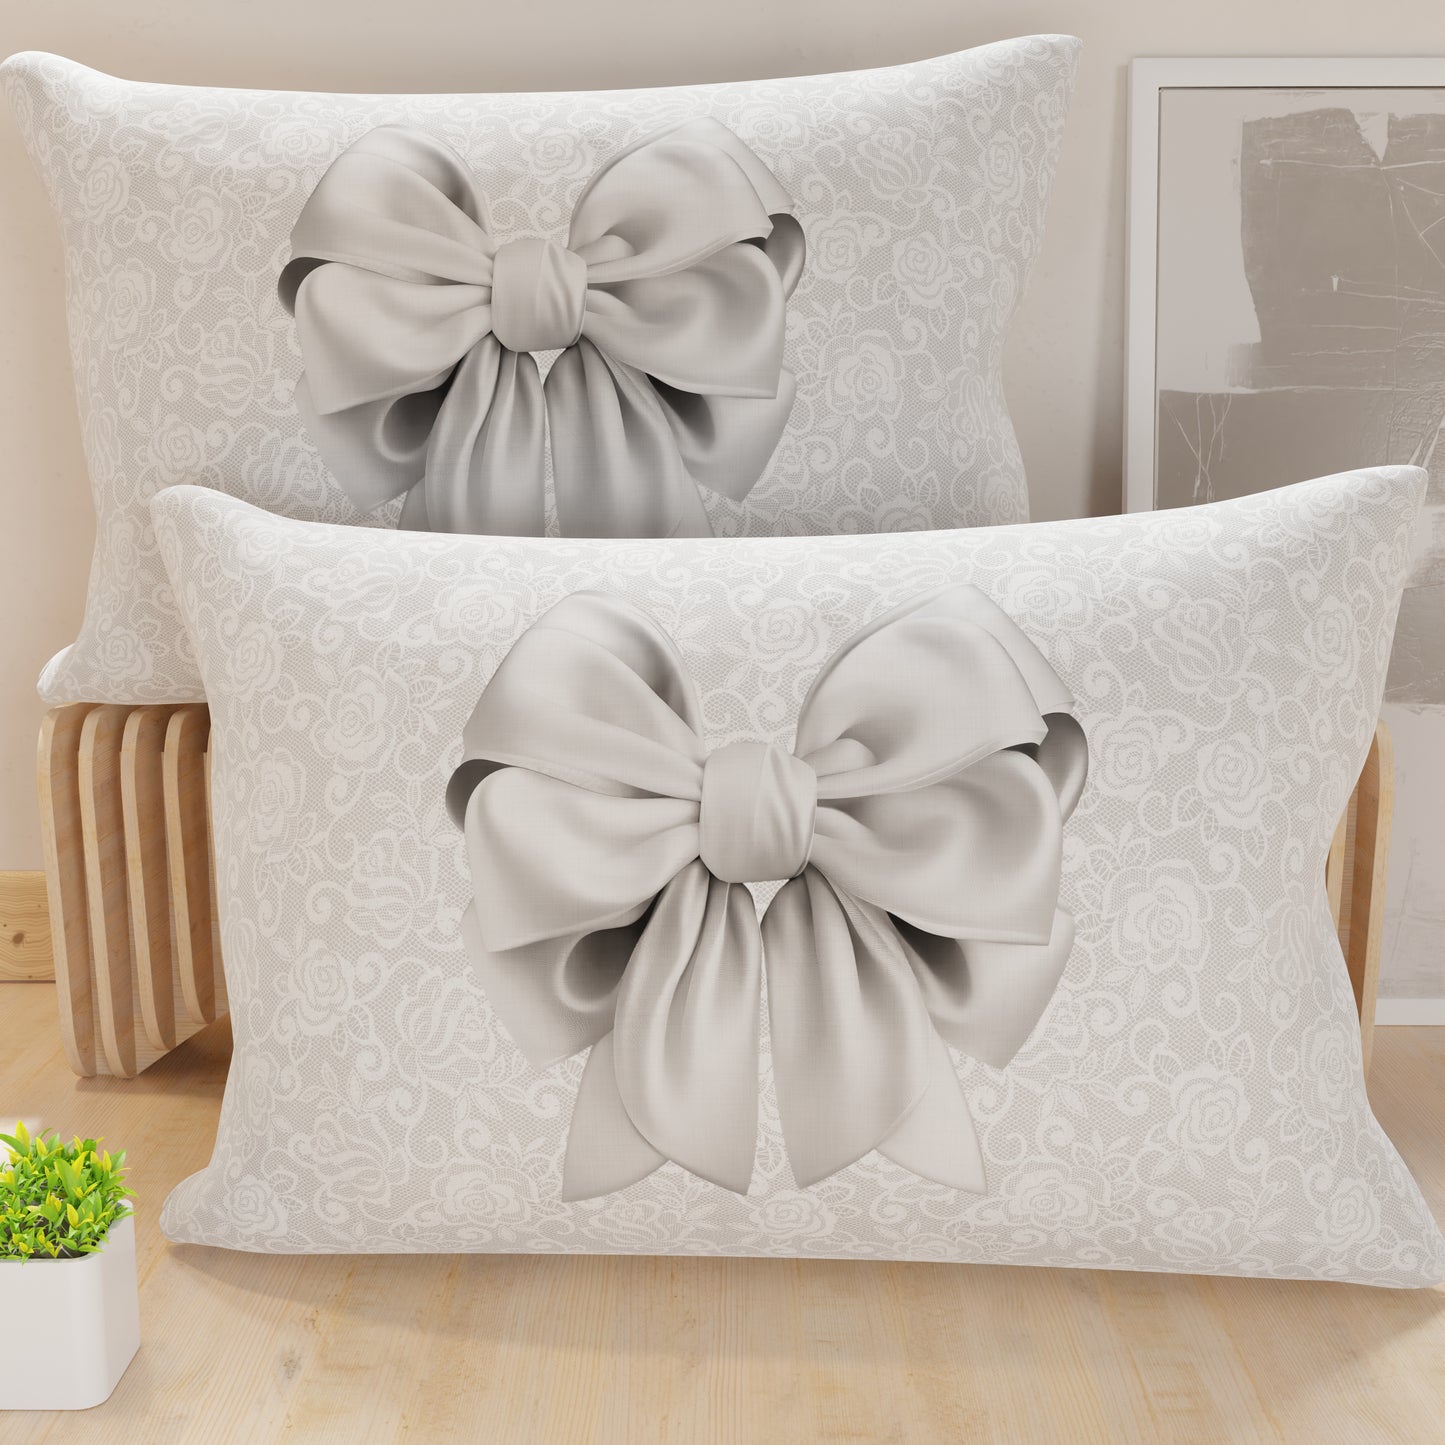 Pillowcases, Cushion Covers in Digital Print, Gray Bow